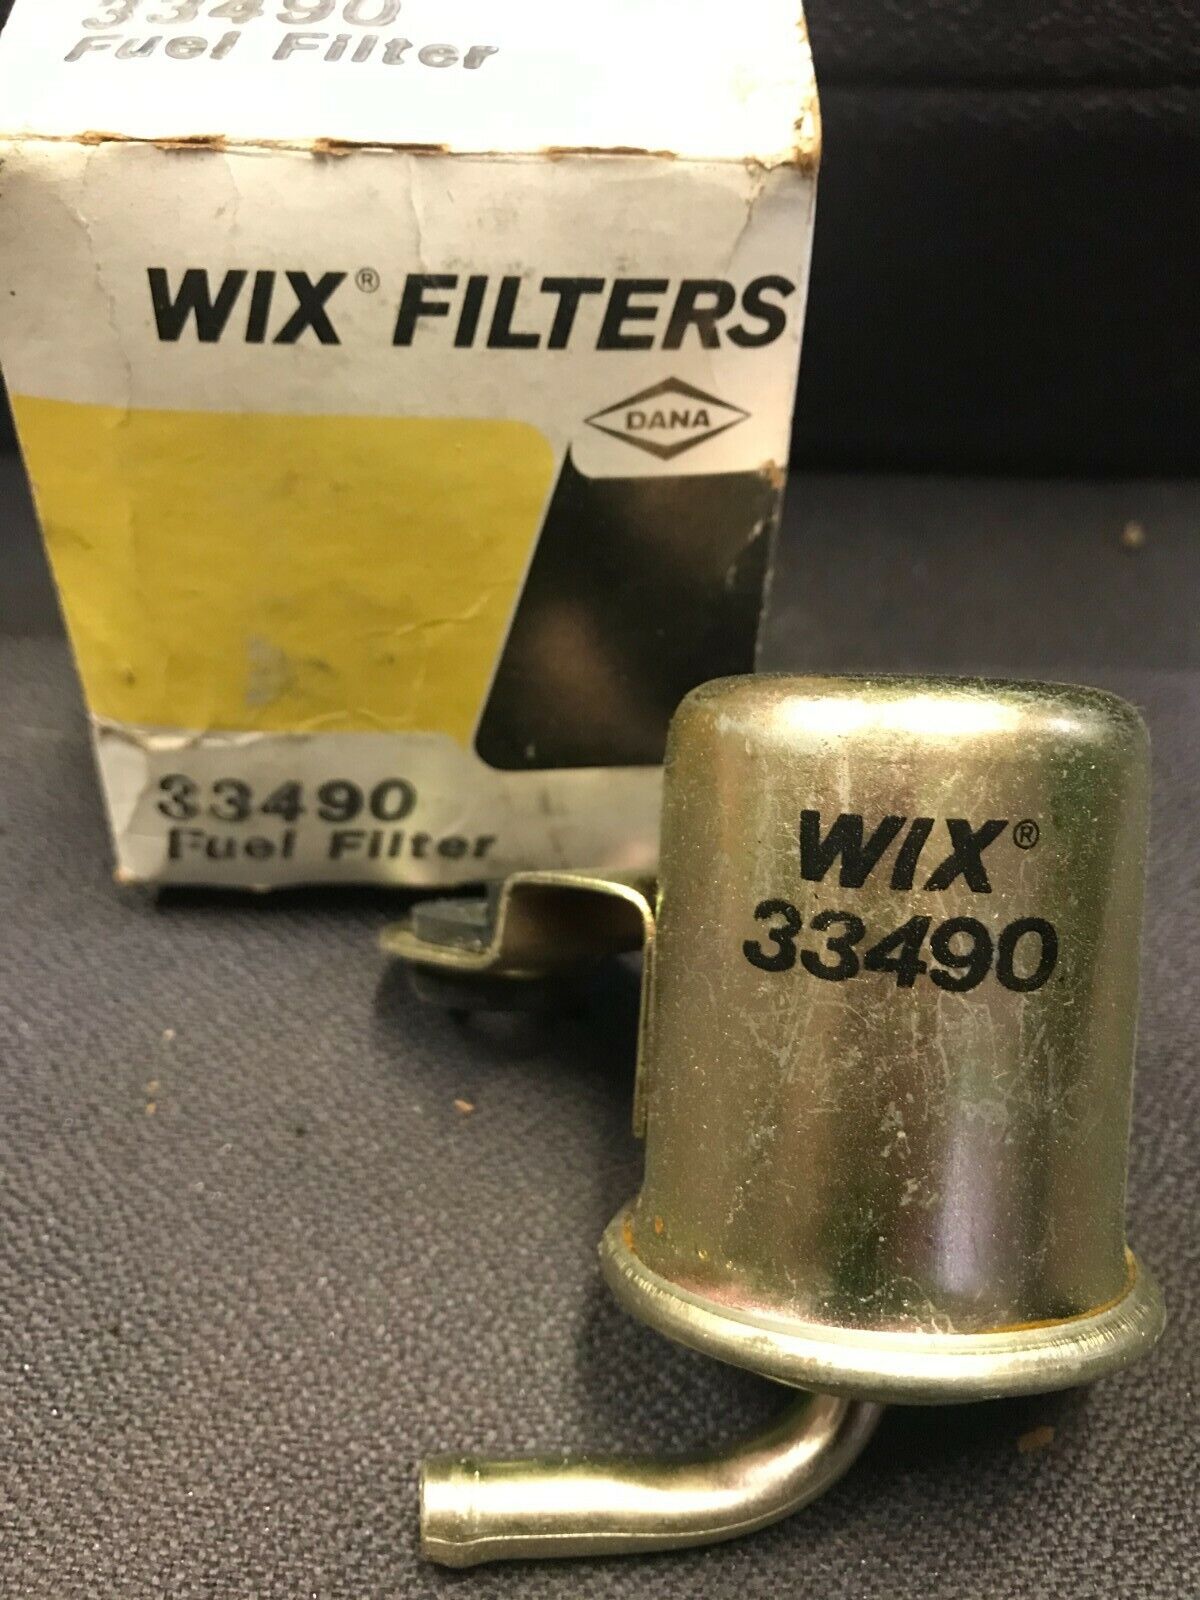 Fuel Filter Wix 33490